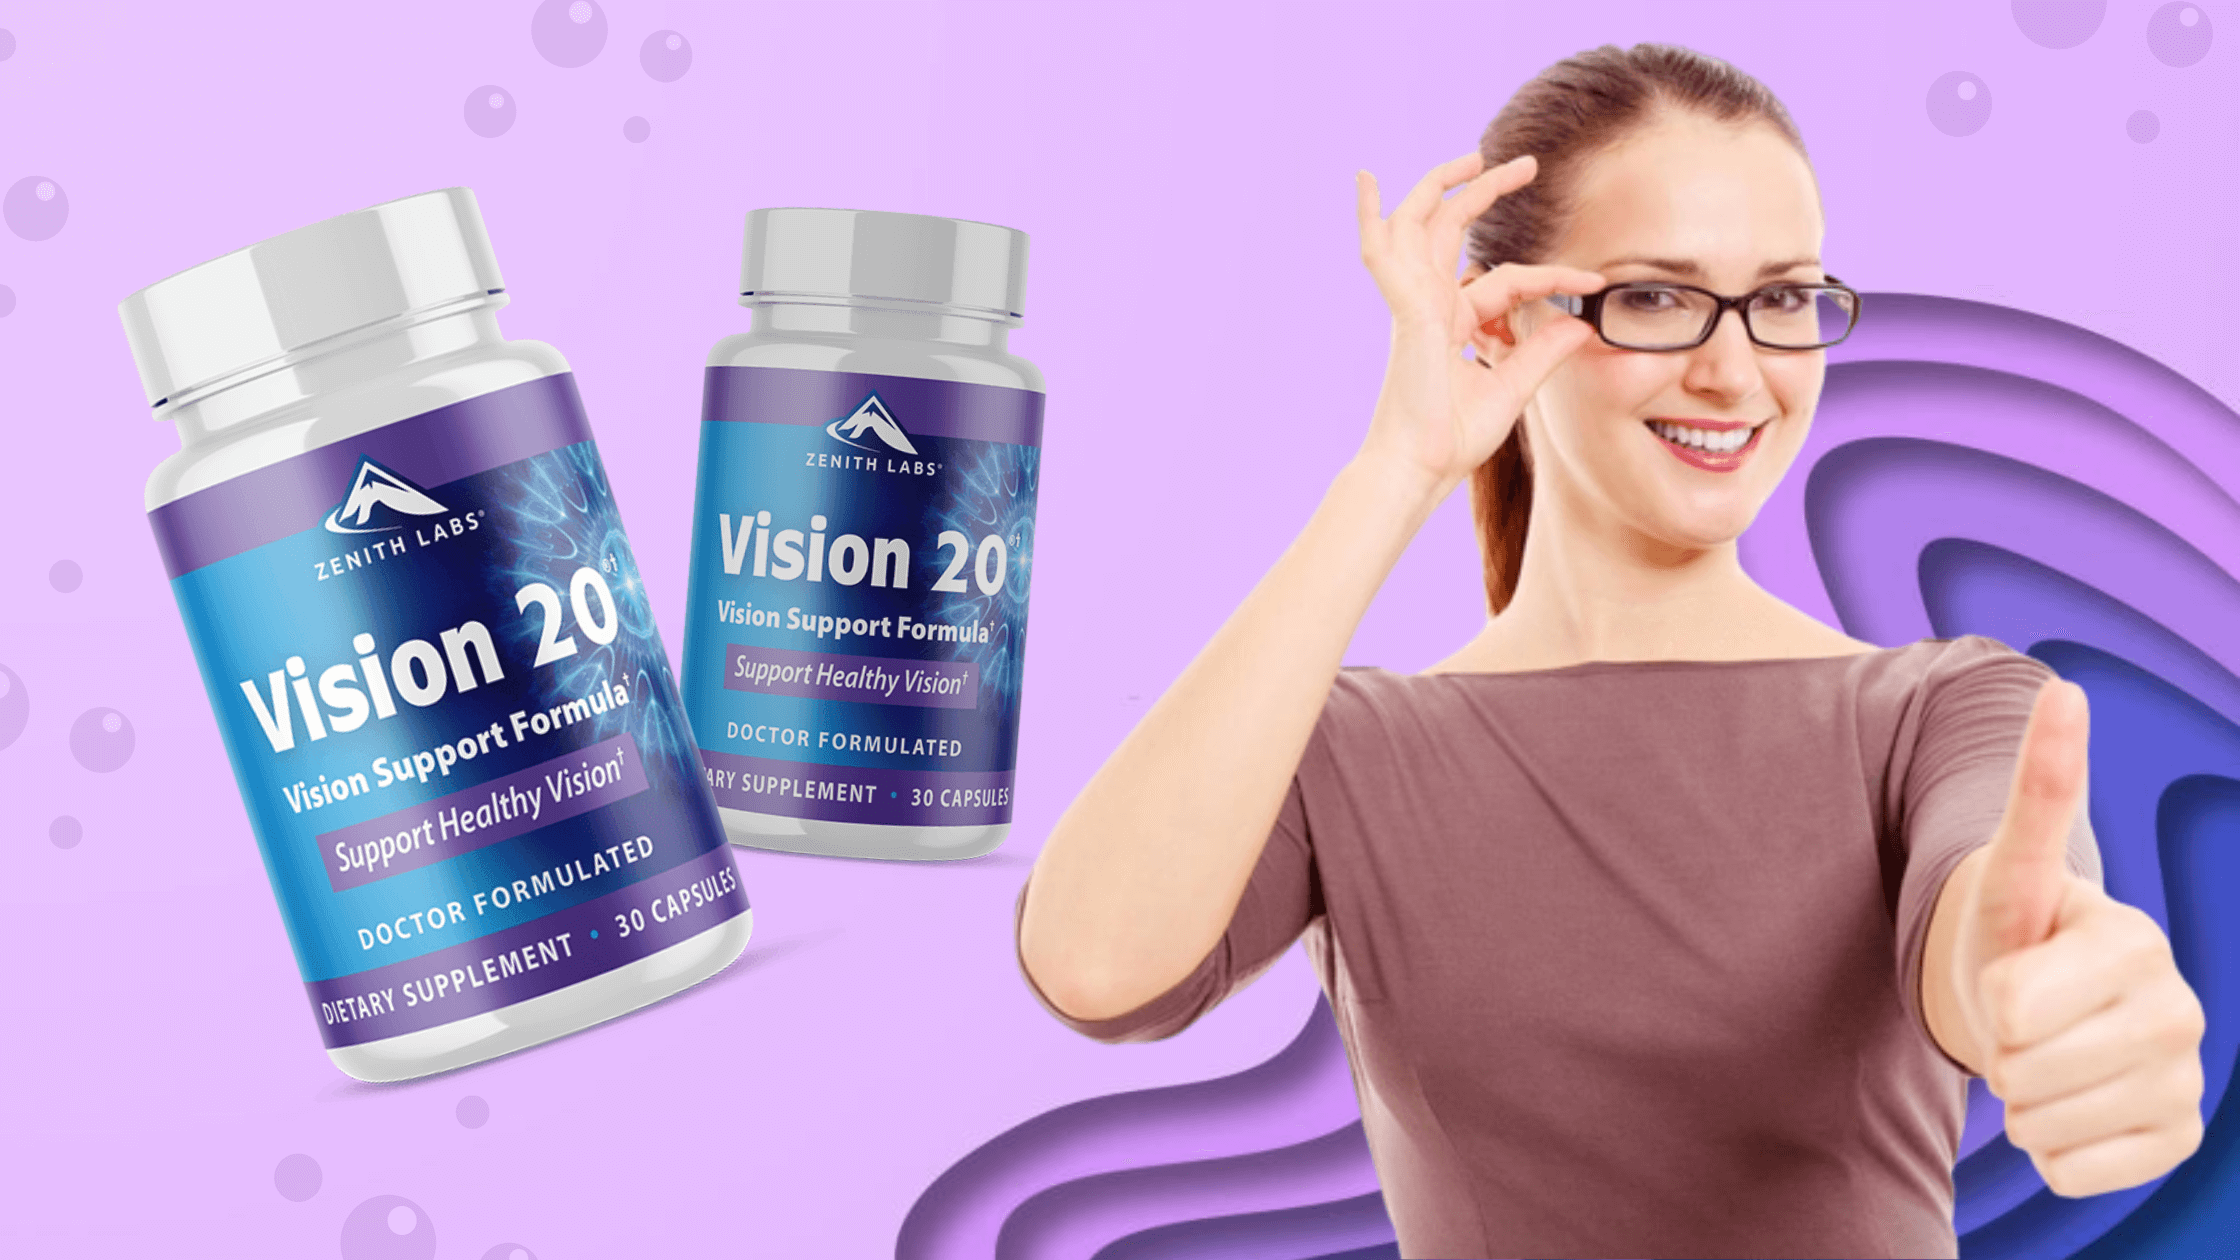 Zenith Labs Vision 20 Supplement